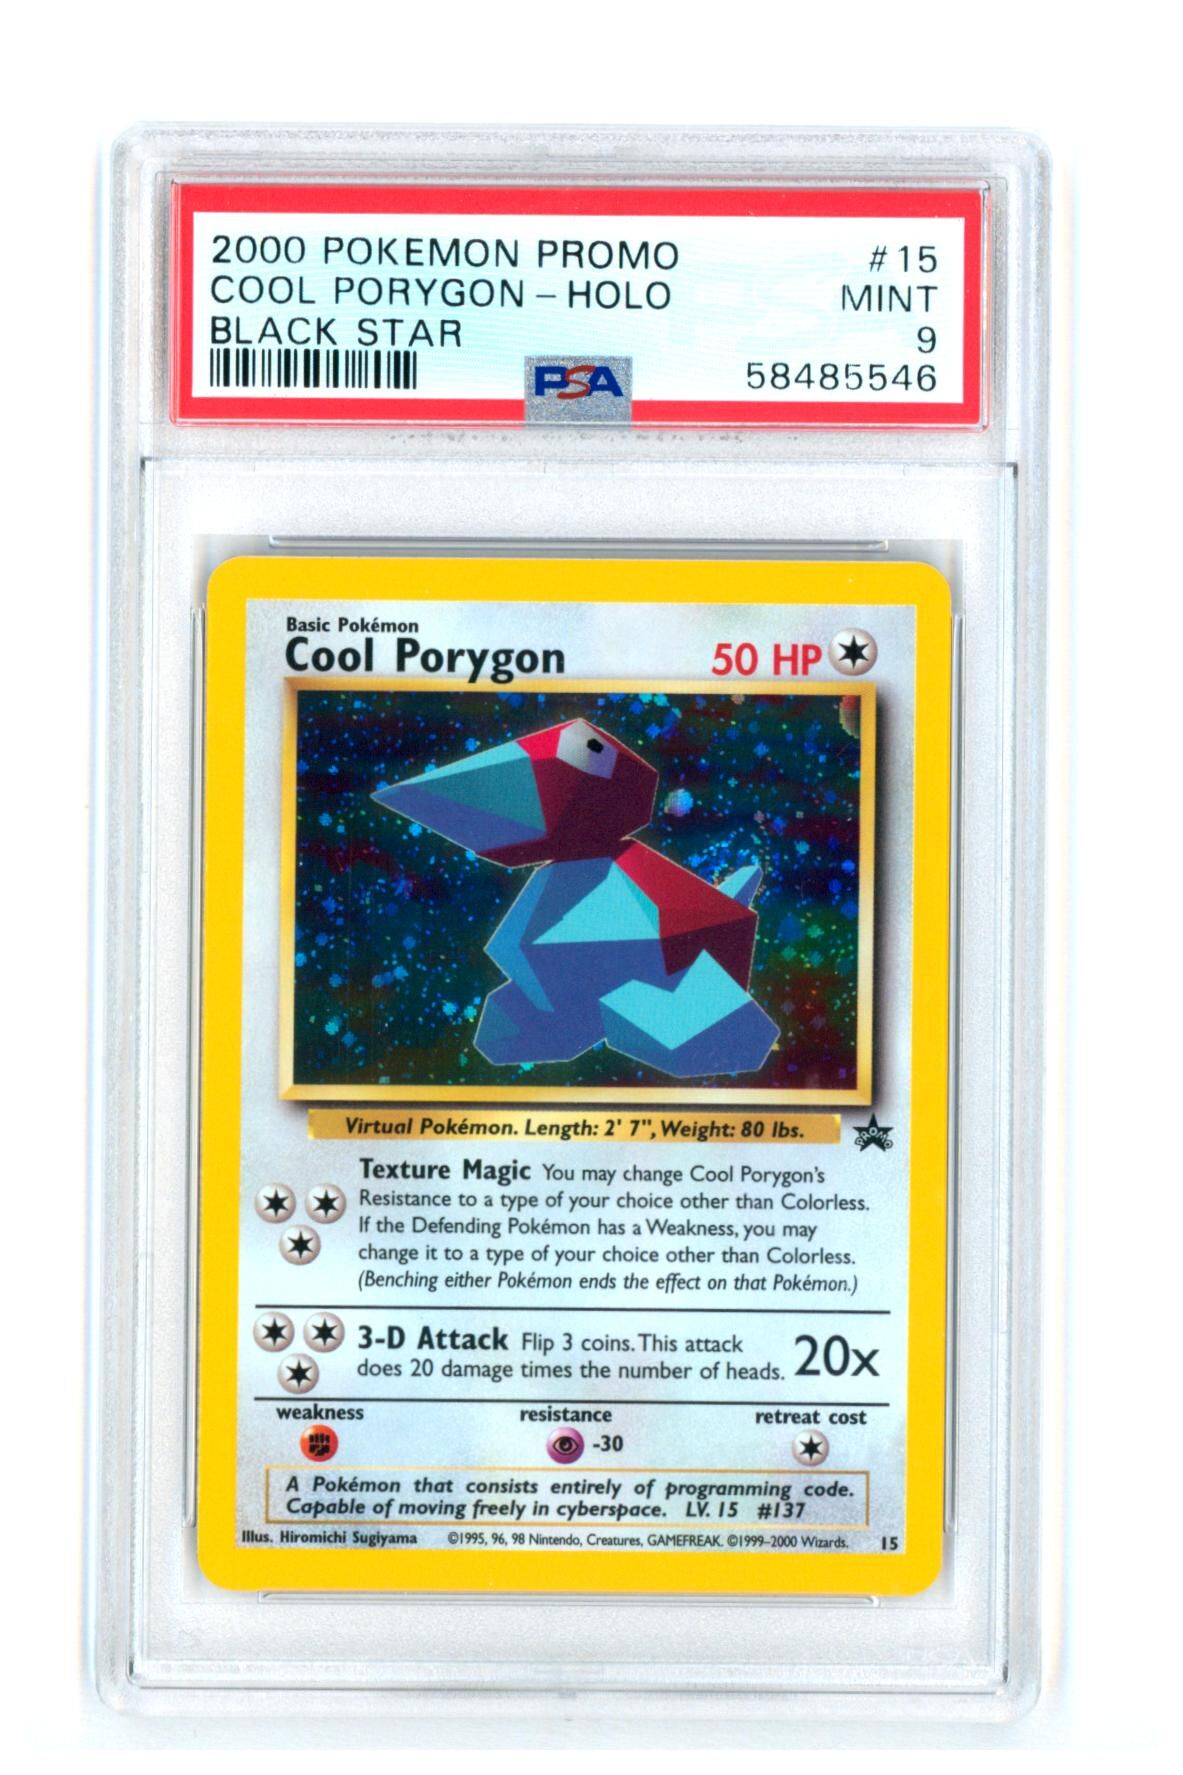 Cool Porygon - Black Star Promo 15 - Holo - PSA 9 MINT - Pokémon